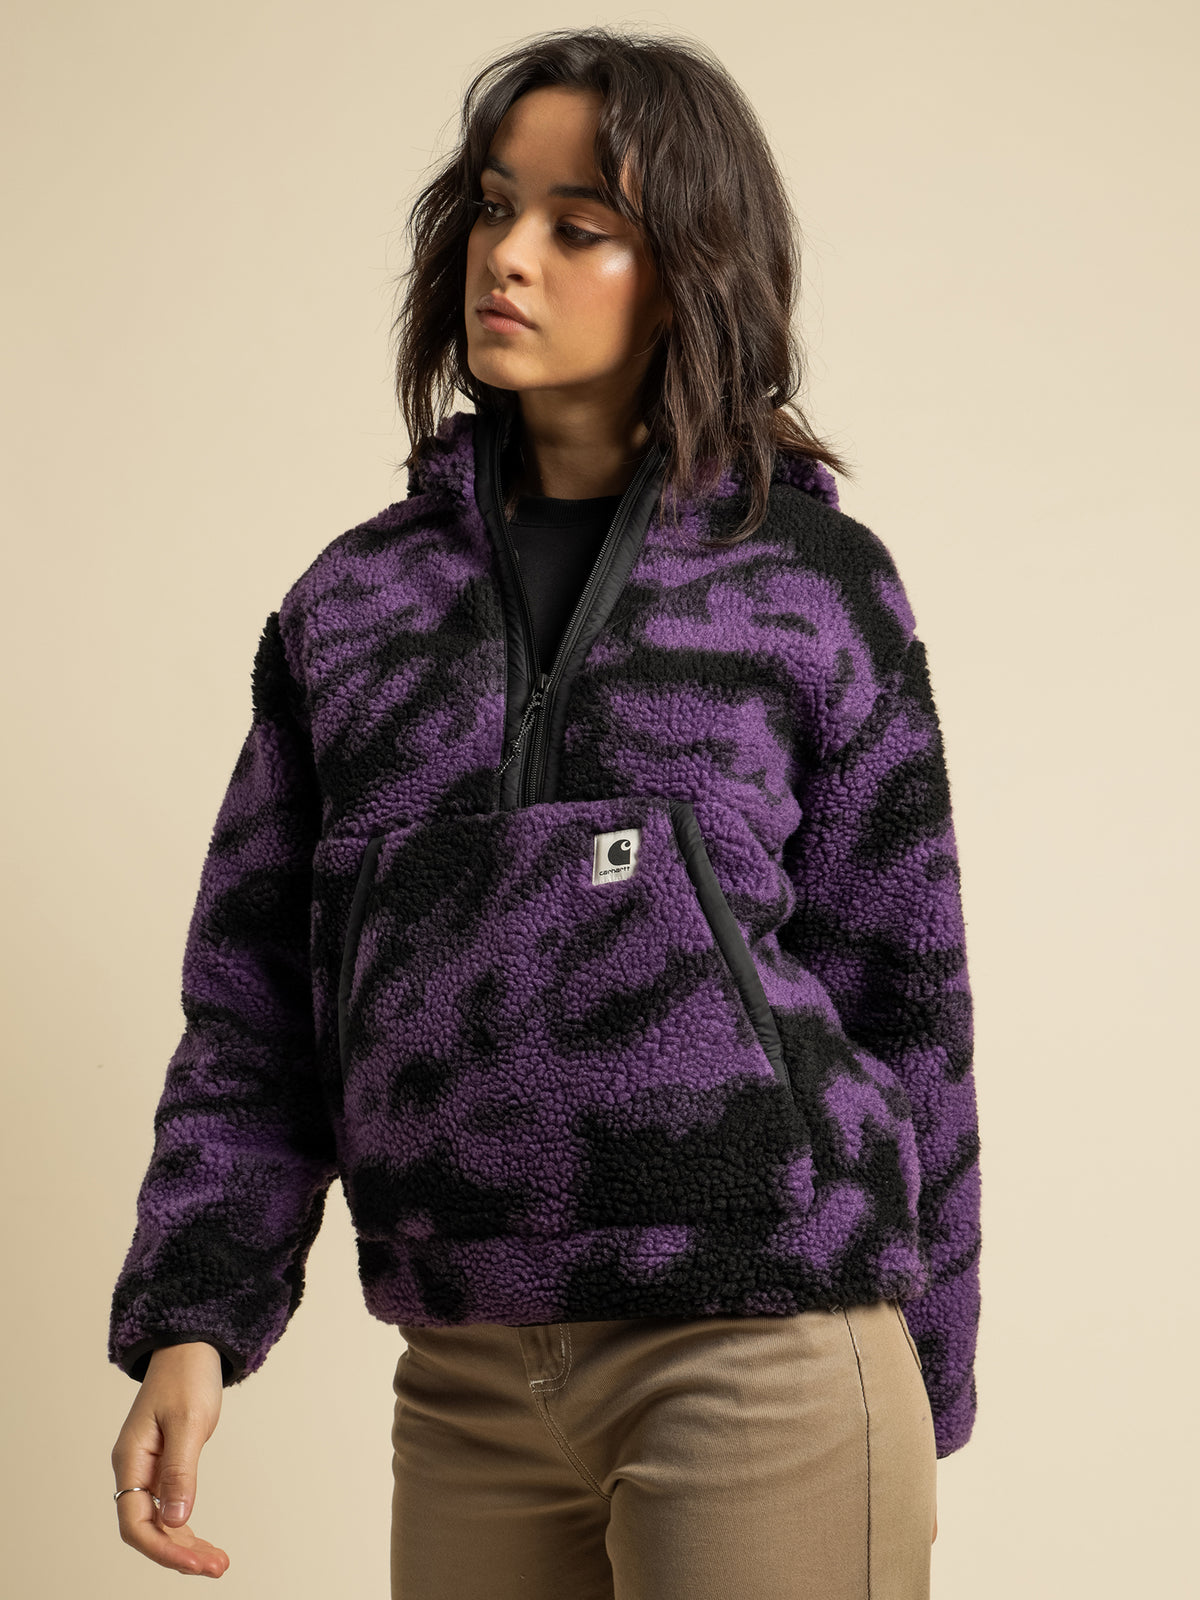 Hooded Loon Liner Sherpa Jacket in Purple Camoflage